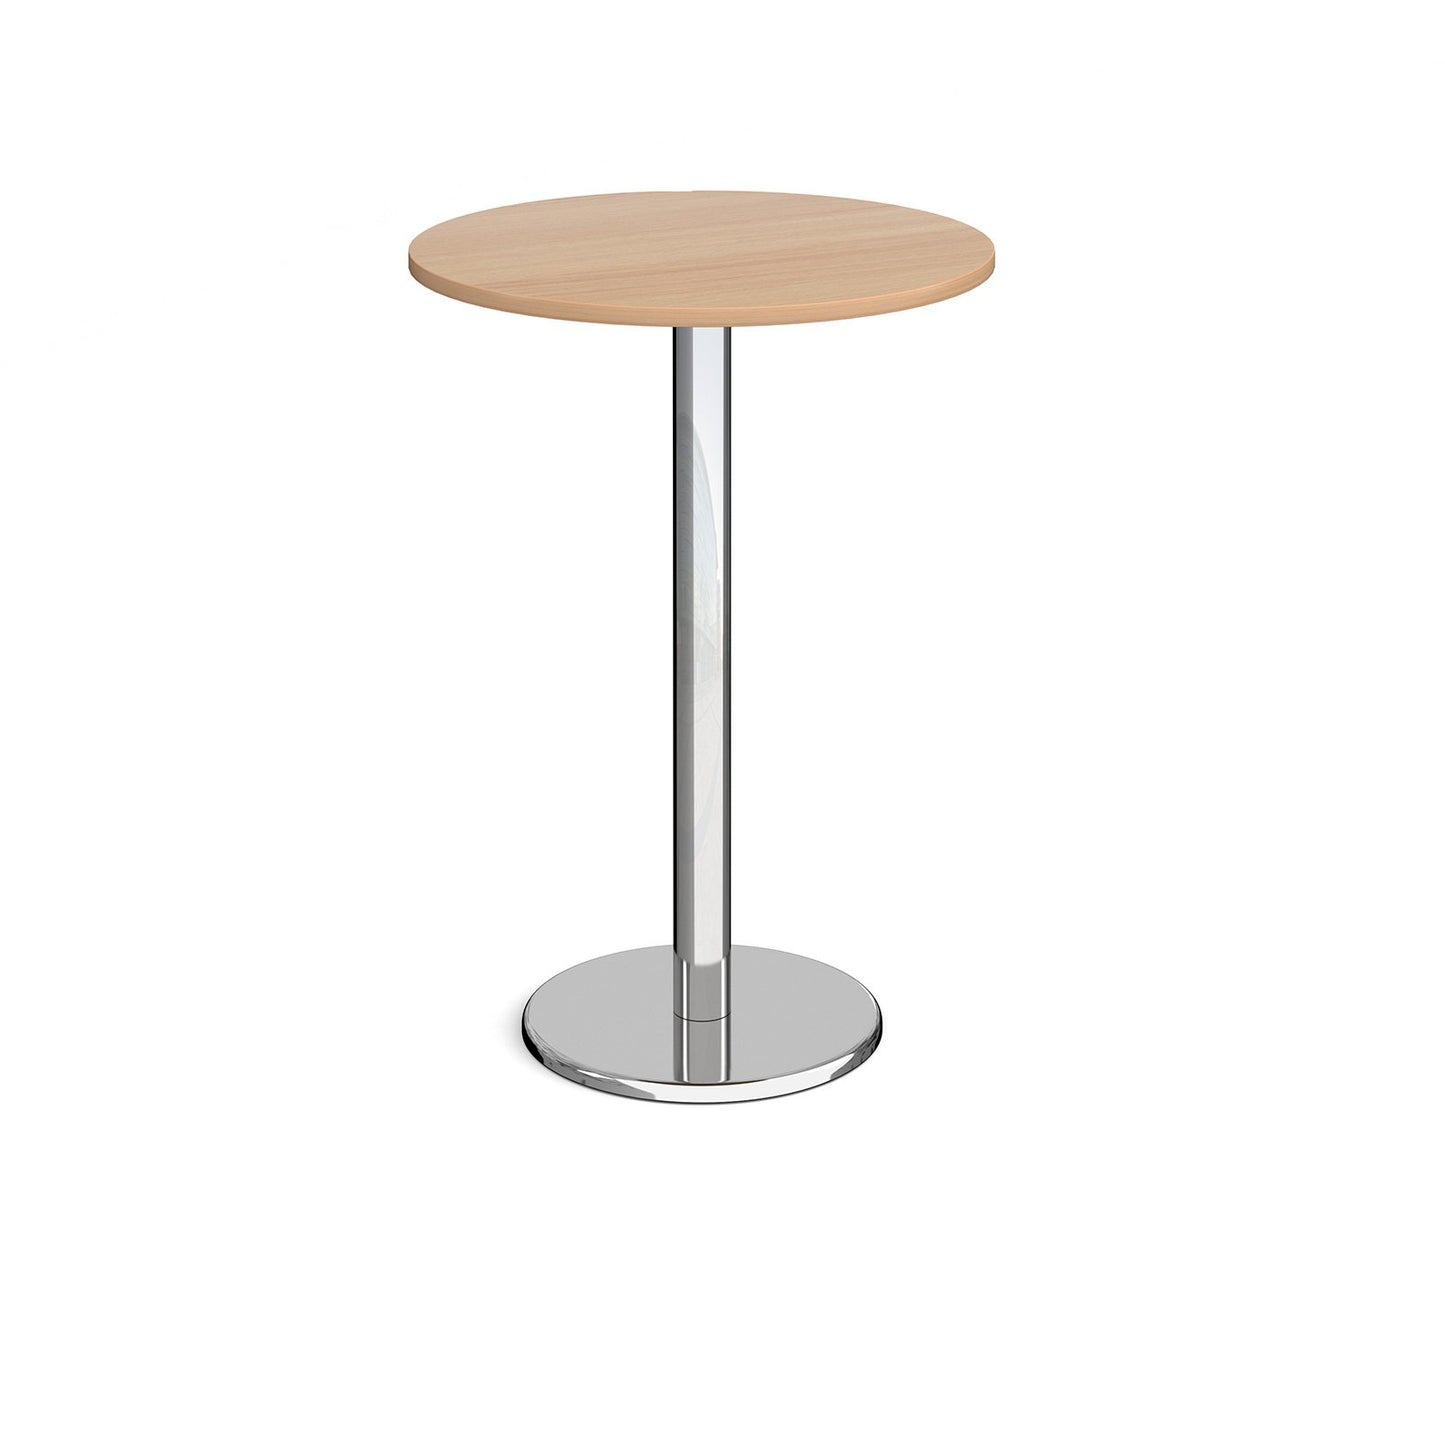 Pisa circular poseur table with round base